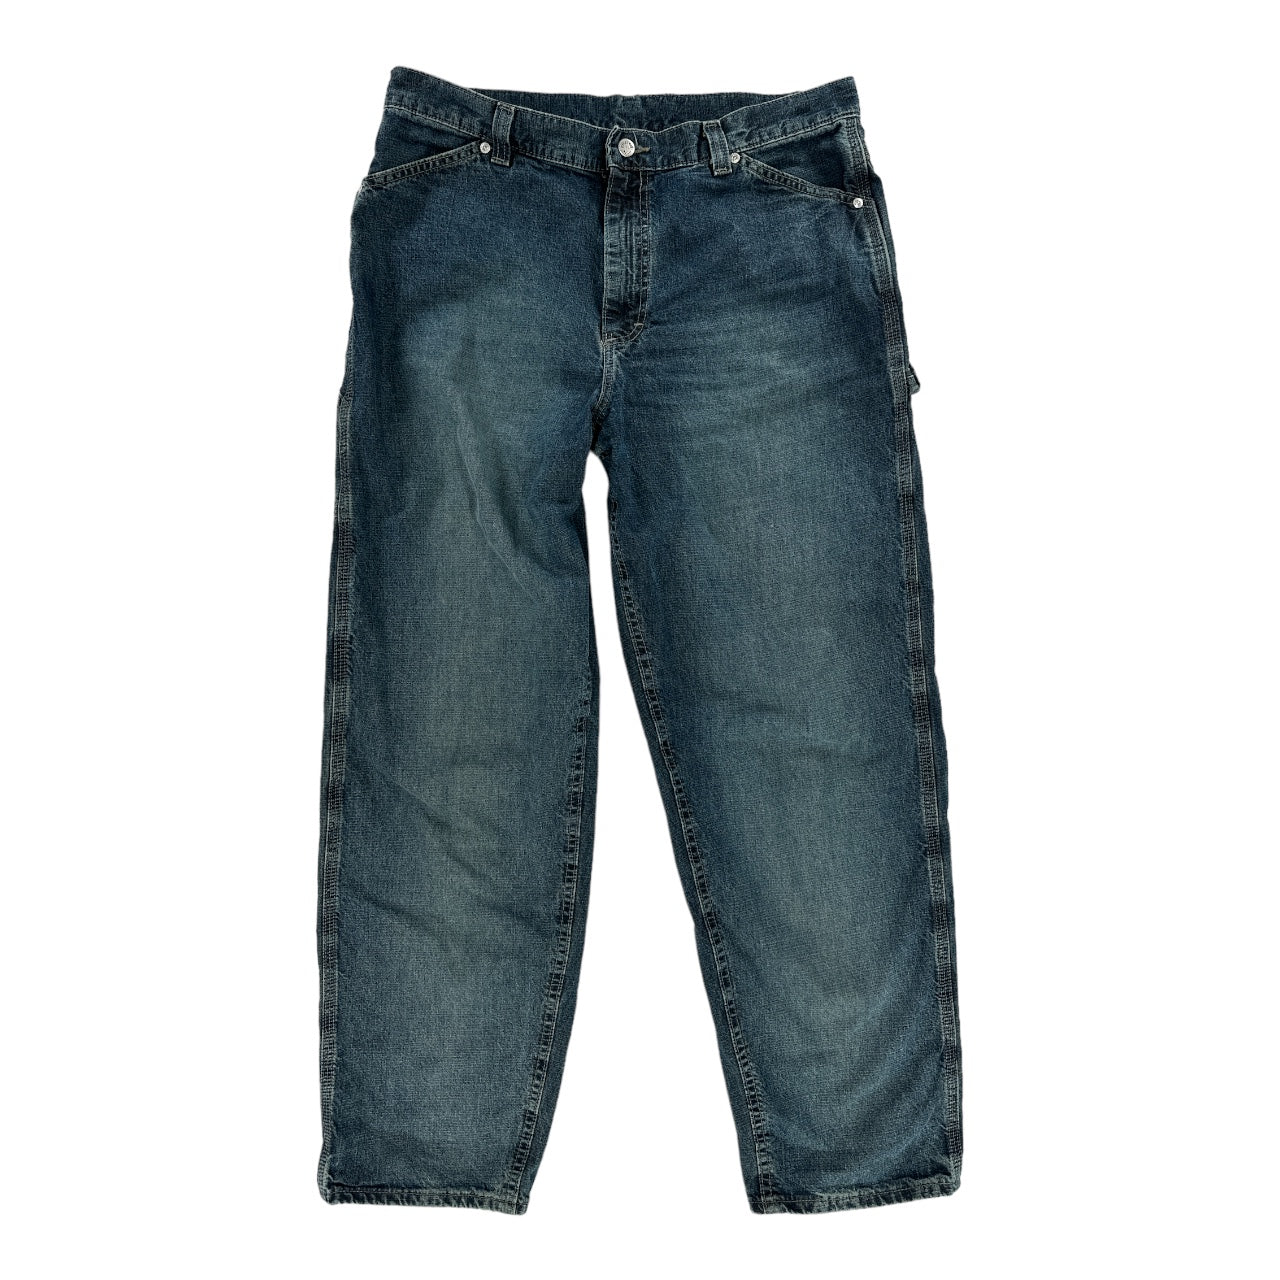 Vintage Lee Riveted Carpenter Jeans - Women's 36x32 (16 Medium)-1